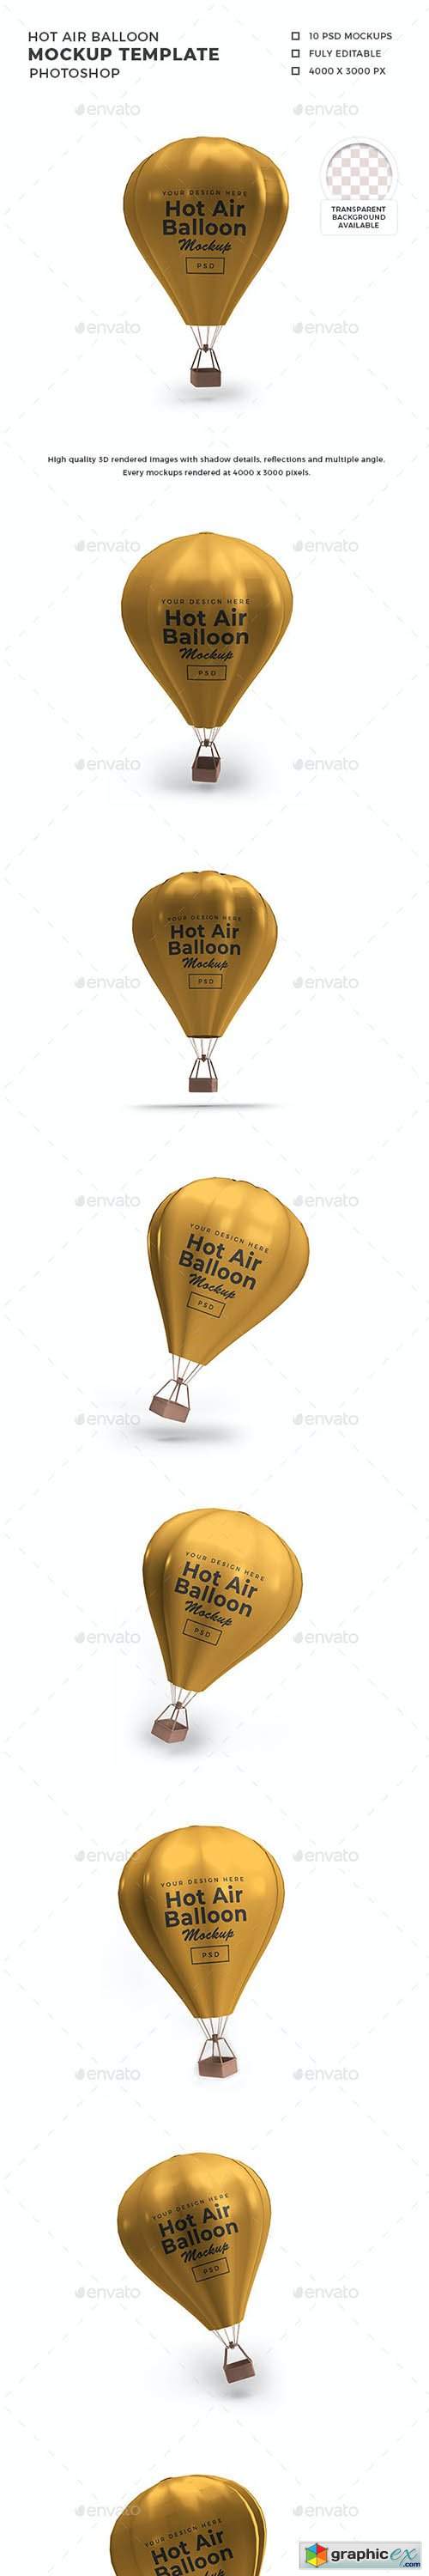 Download Hot Air Balloon 3D Mockup Template » Free Download Vector ...